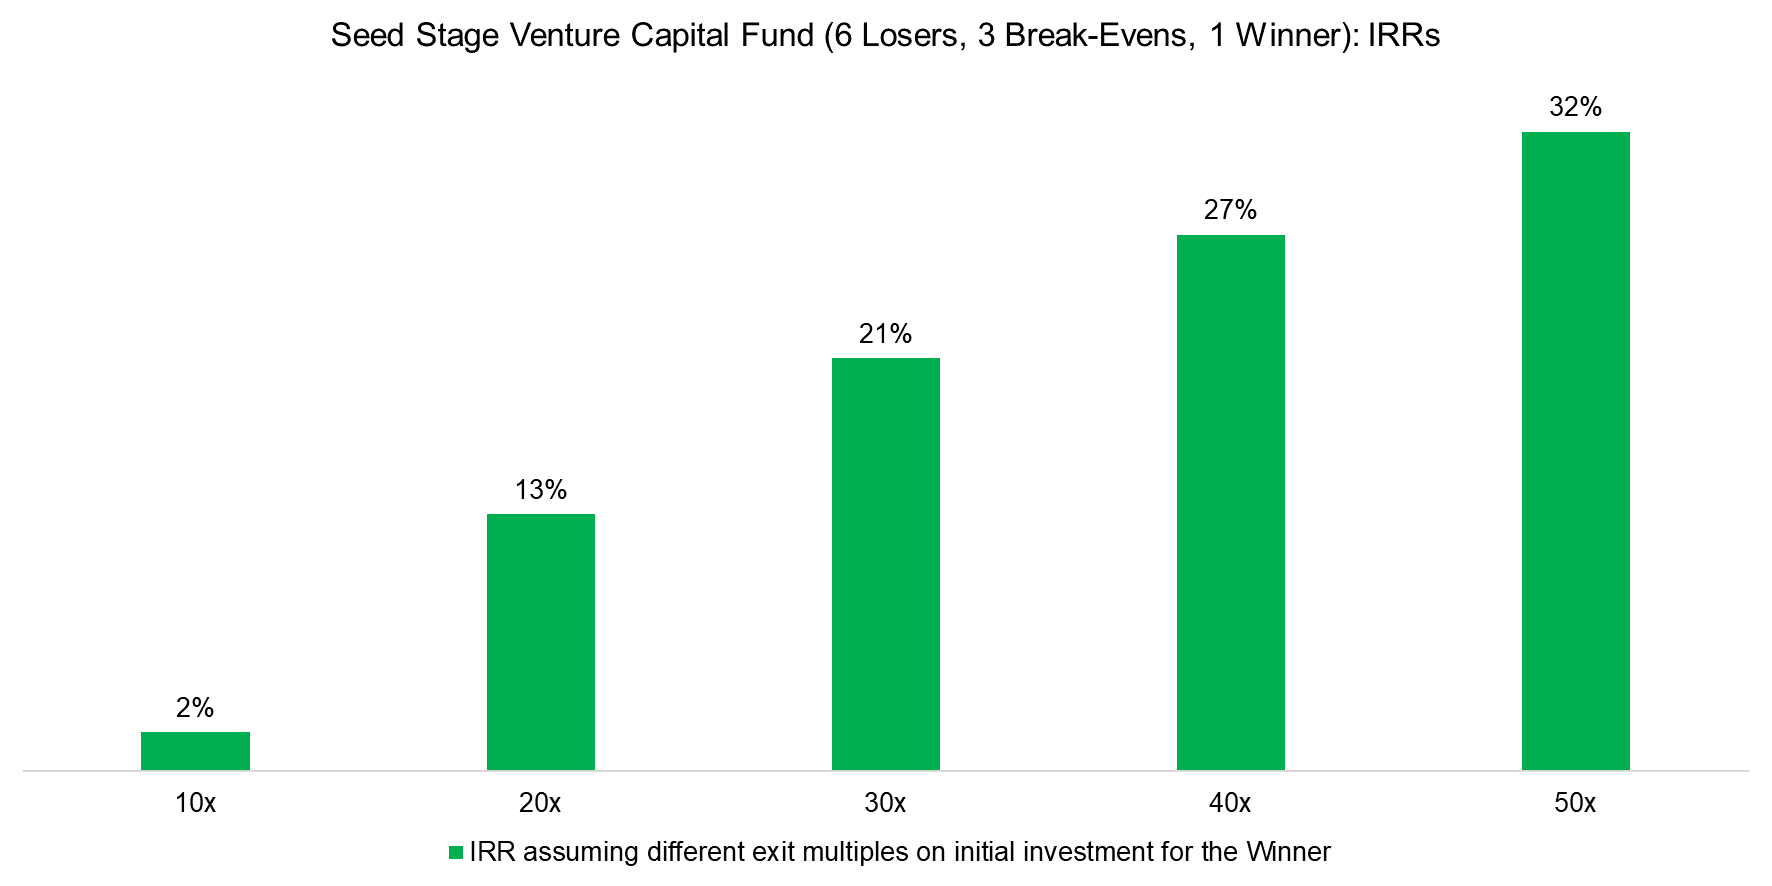 Seed Stage Venture Capital Fund (6 Losers, 3 Break-Evens, 1 Winner) IRRs